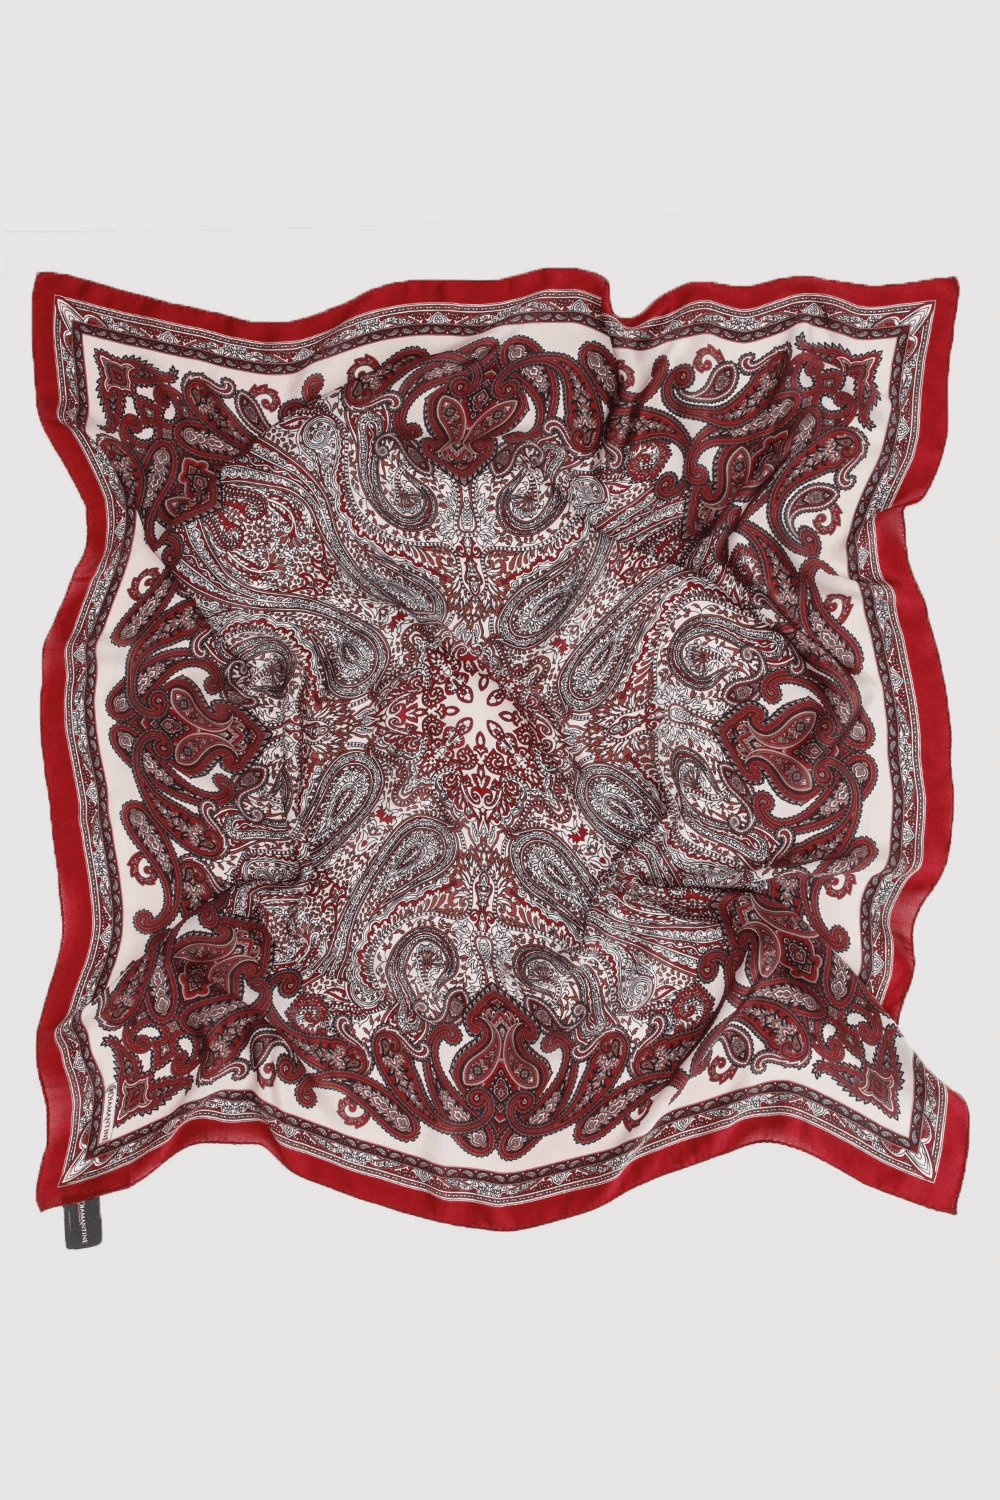 Silk Satin Scarf in Burgundy & Beige Paisley Print